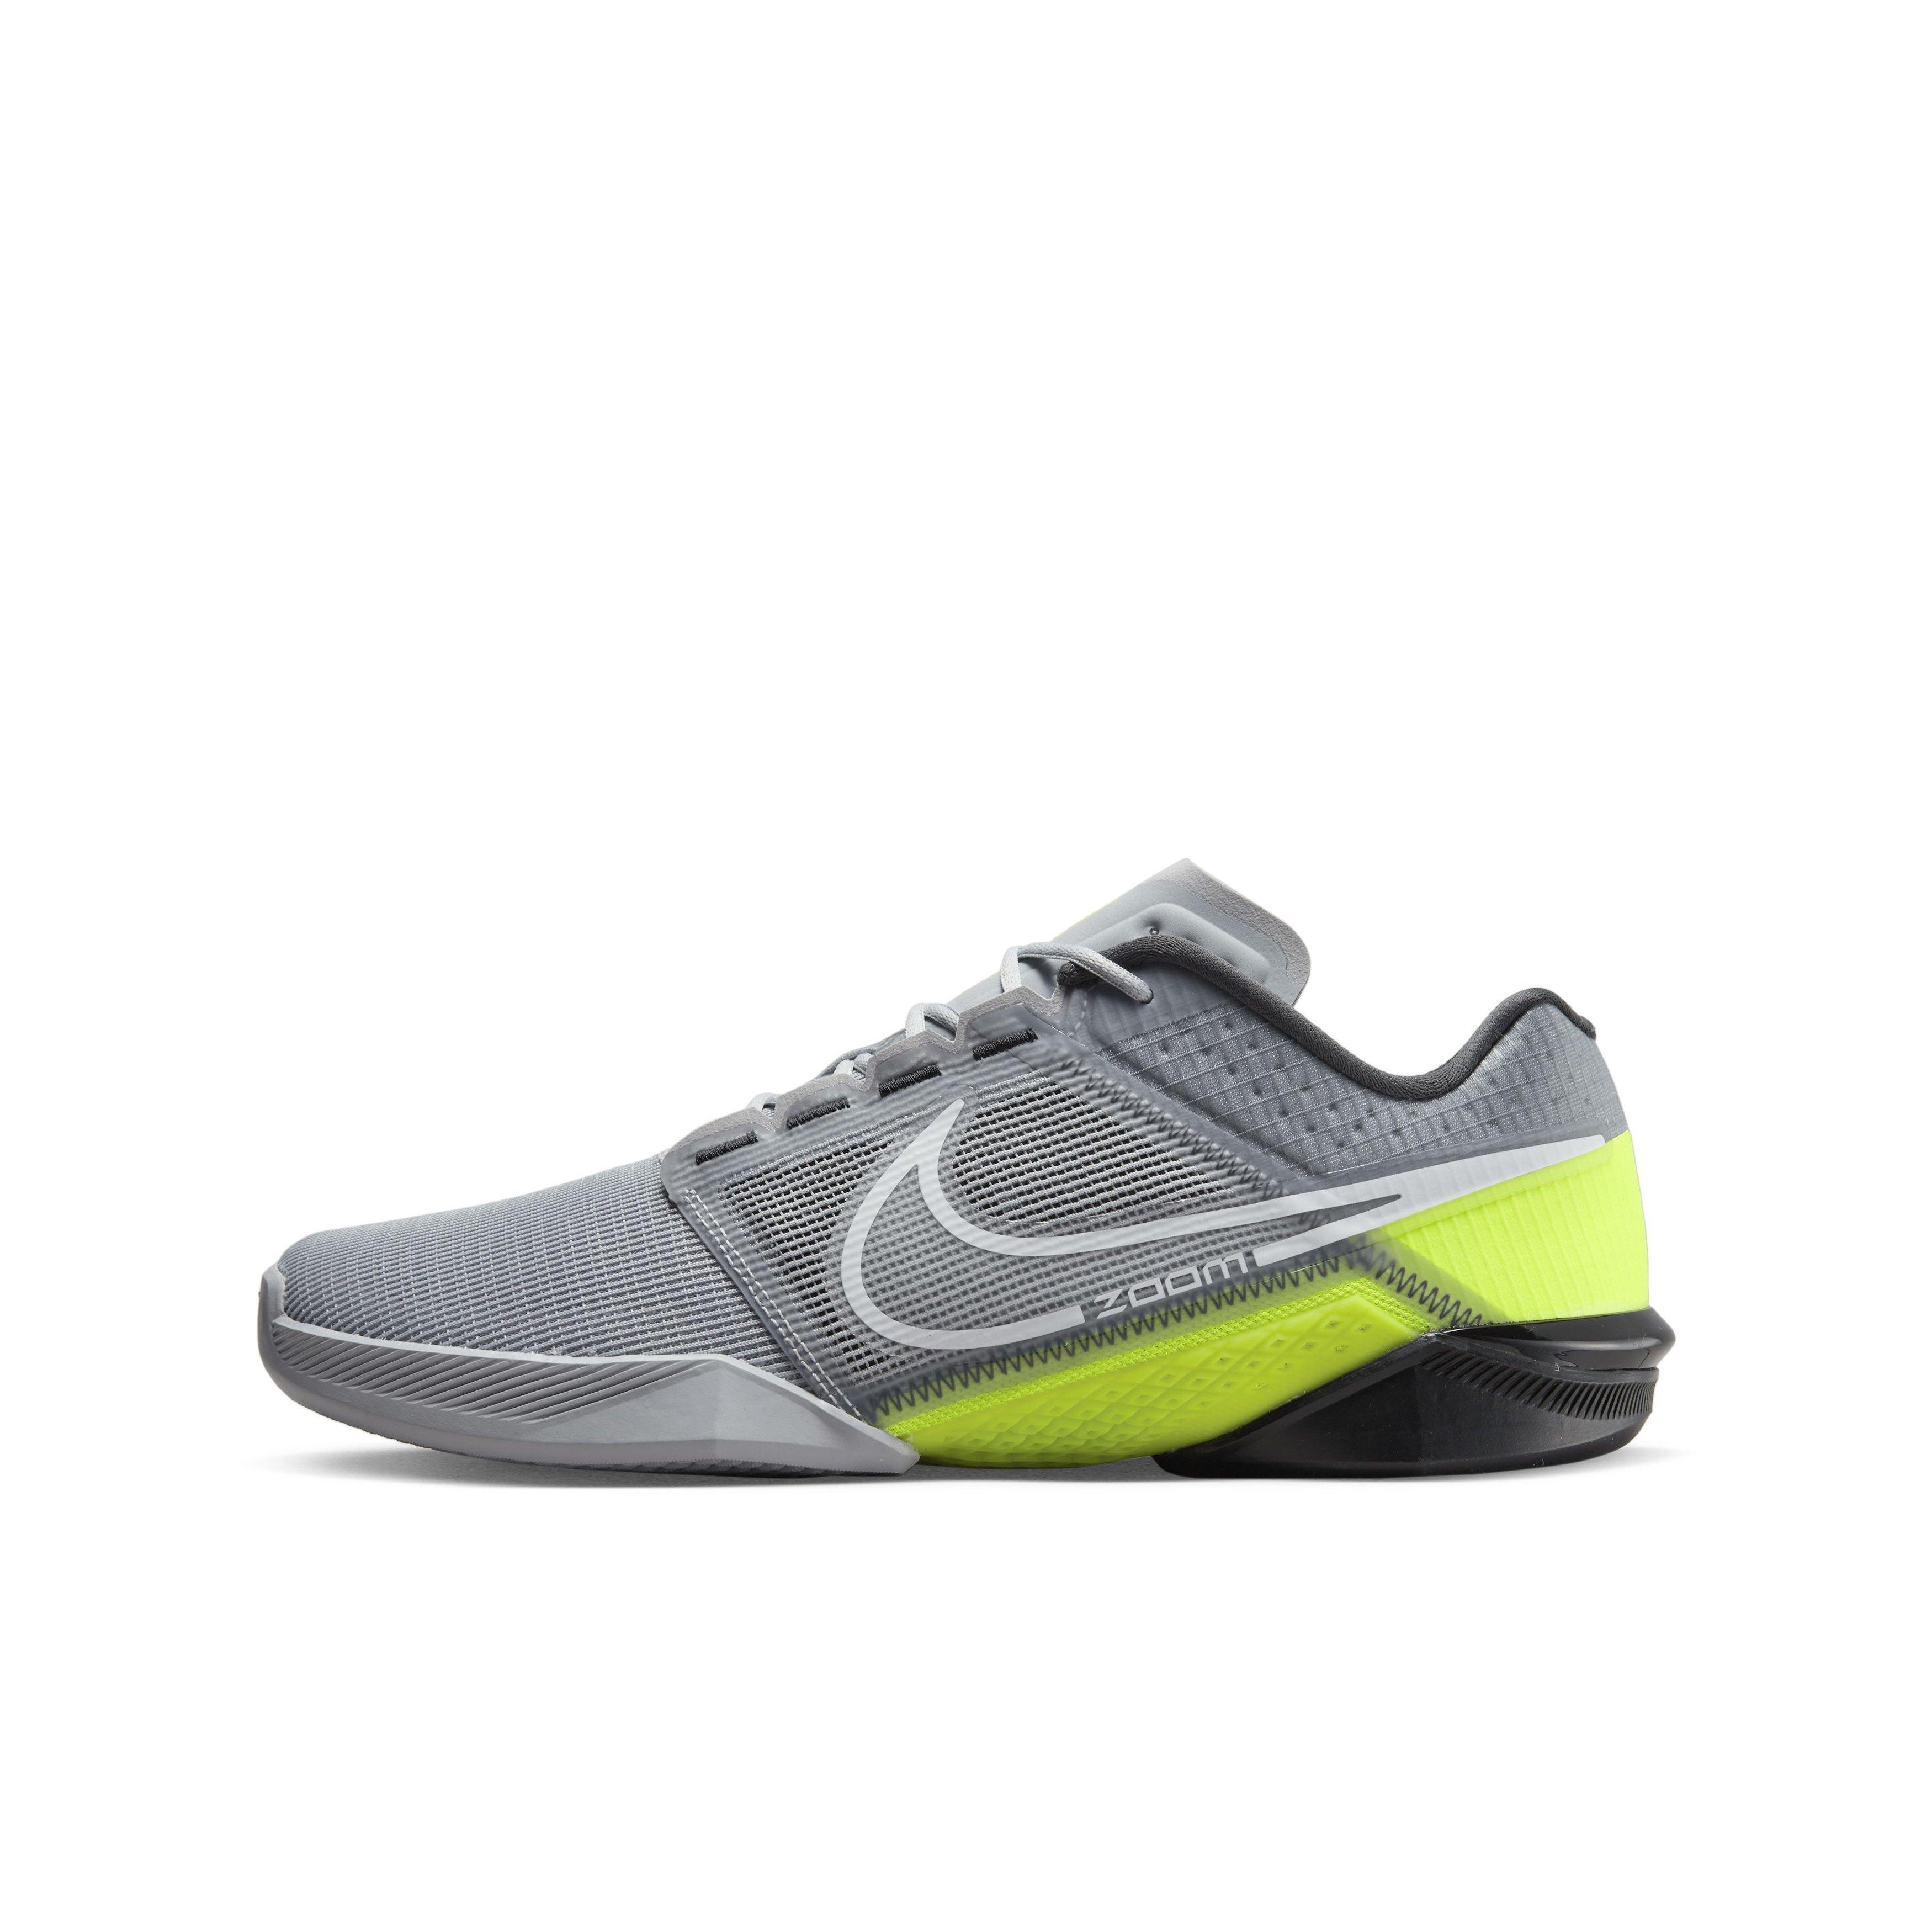 storting Vesting Zin Nike Zoom Metcon Turbo 2 "Wolf Grey/White/Volt/Black" Grade School Boys'  Training Shoe